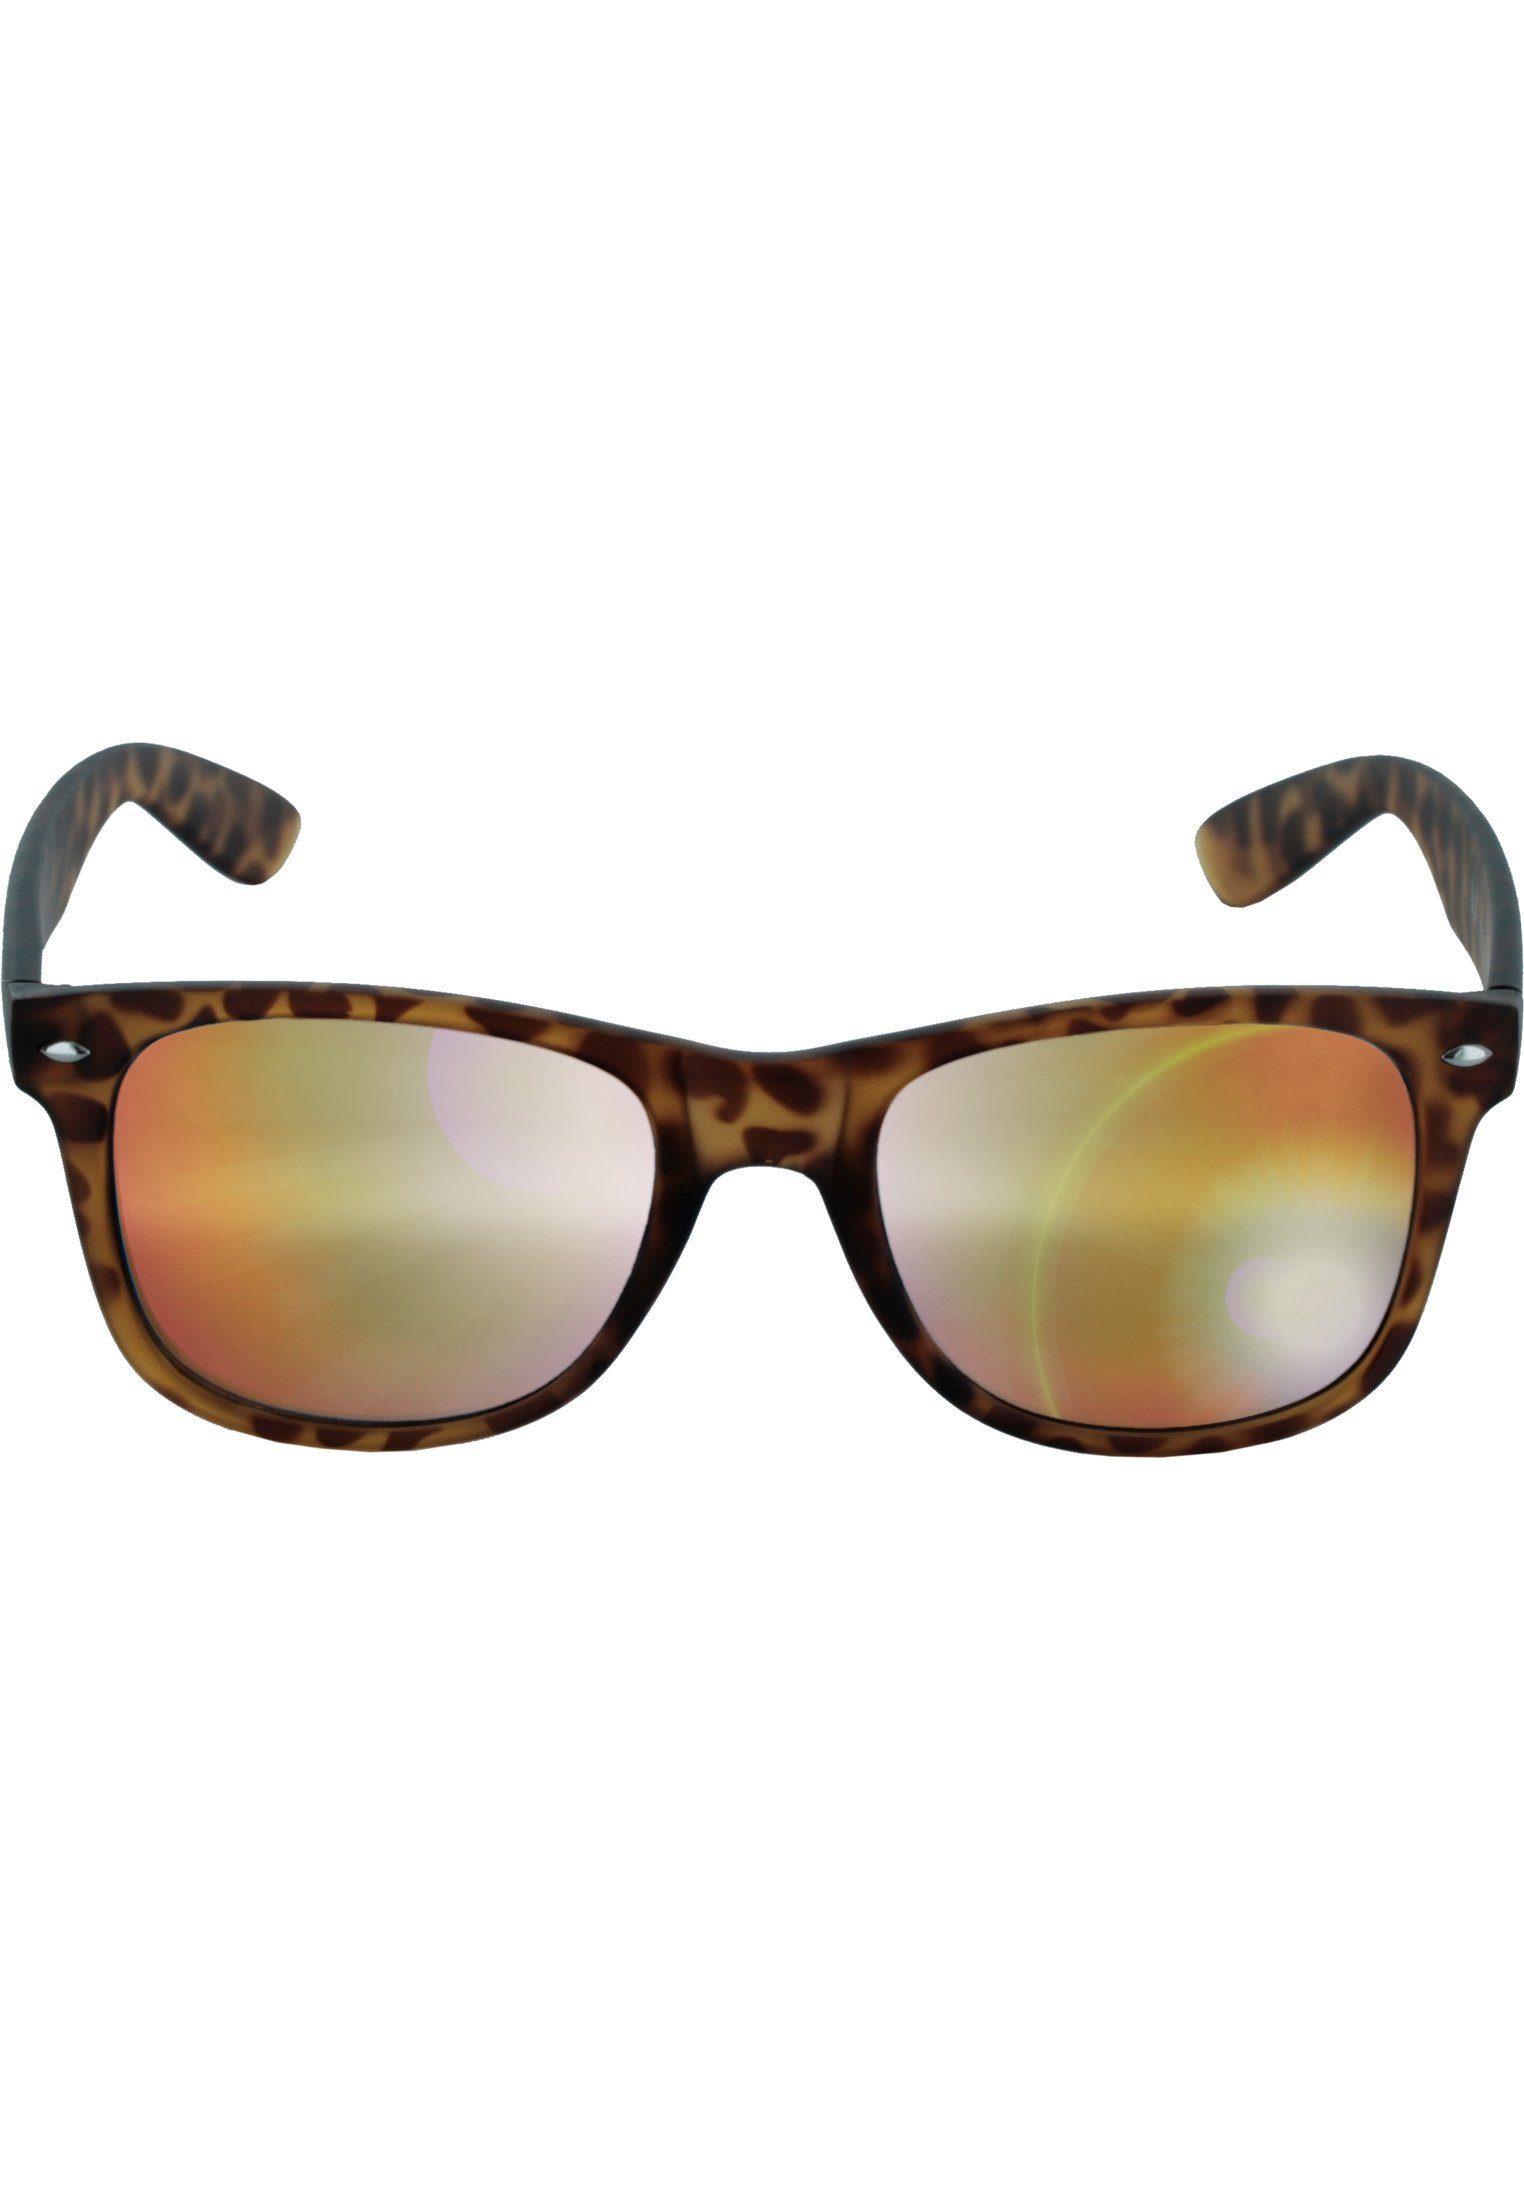 MSTRDS Sonnenbrille Mirror Accessoires amber/orange Likoma Sunglasses